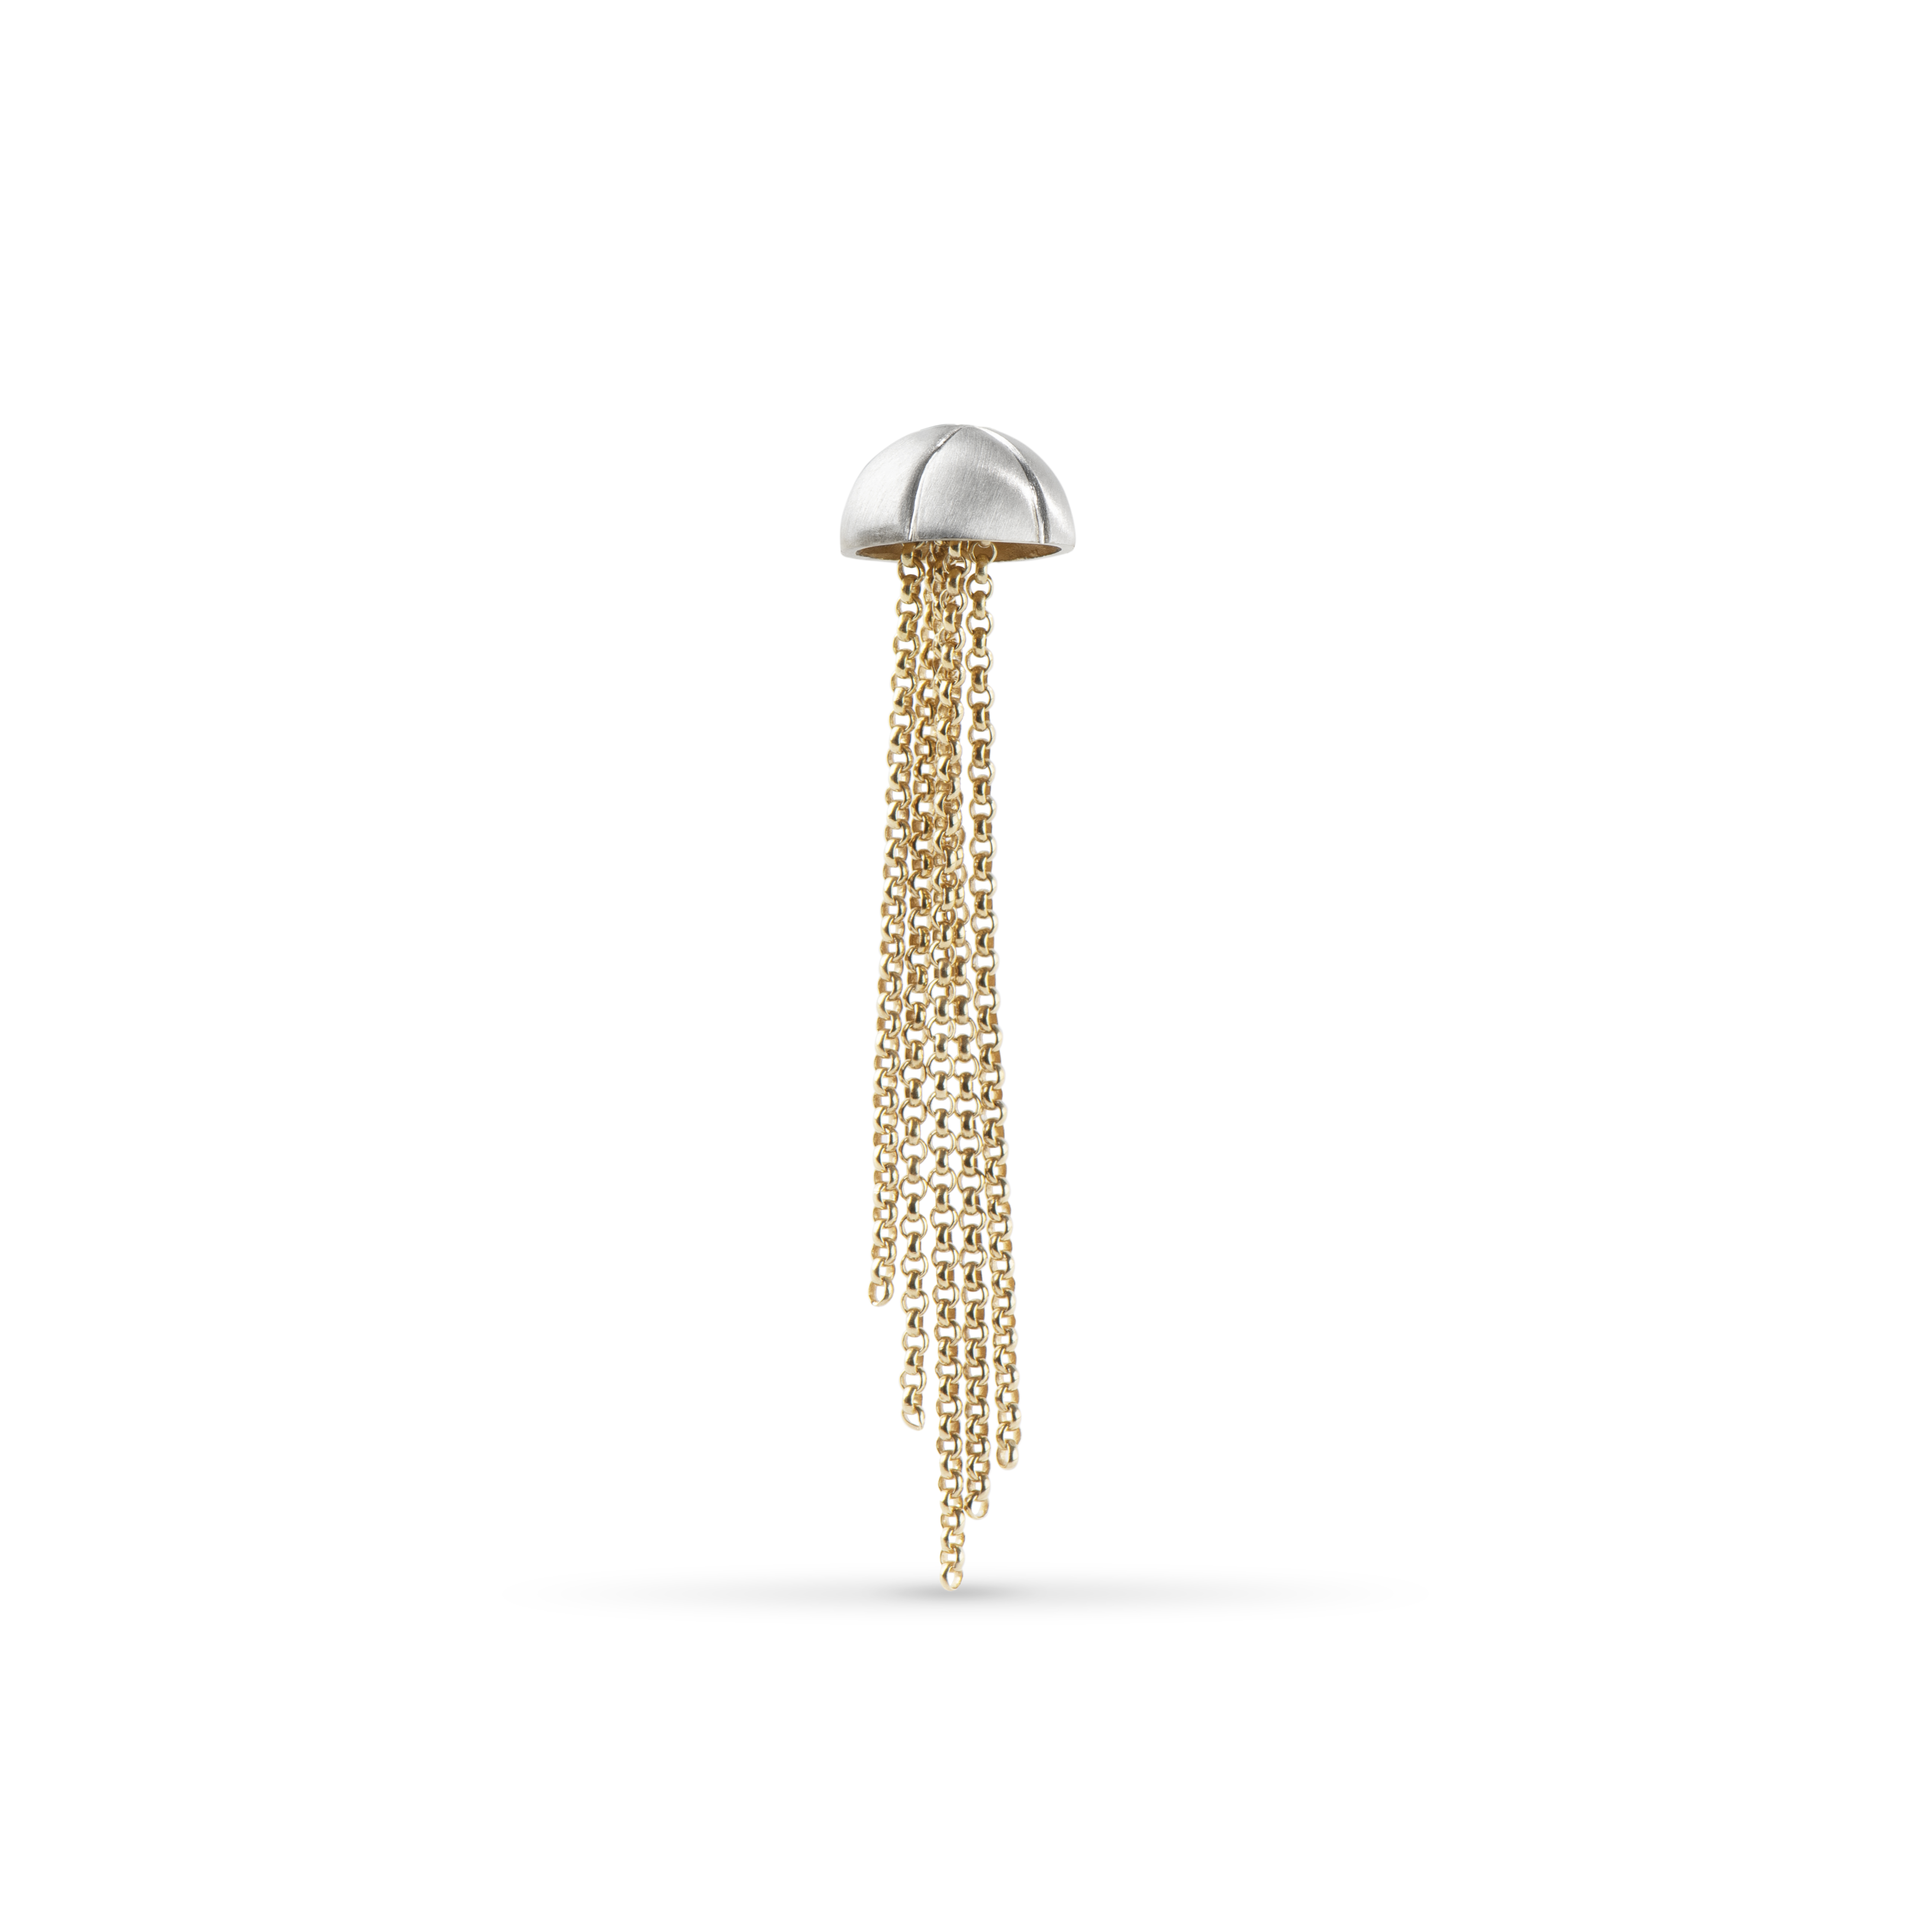 Brincos Jellyfish - Ouro e Prata - Image 2